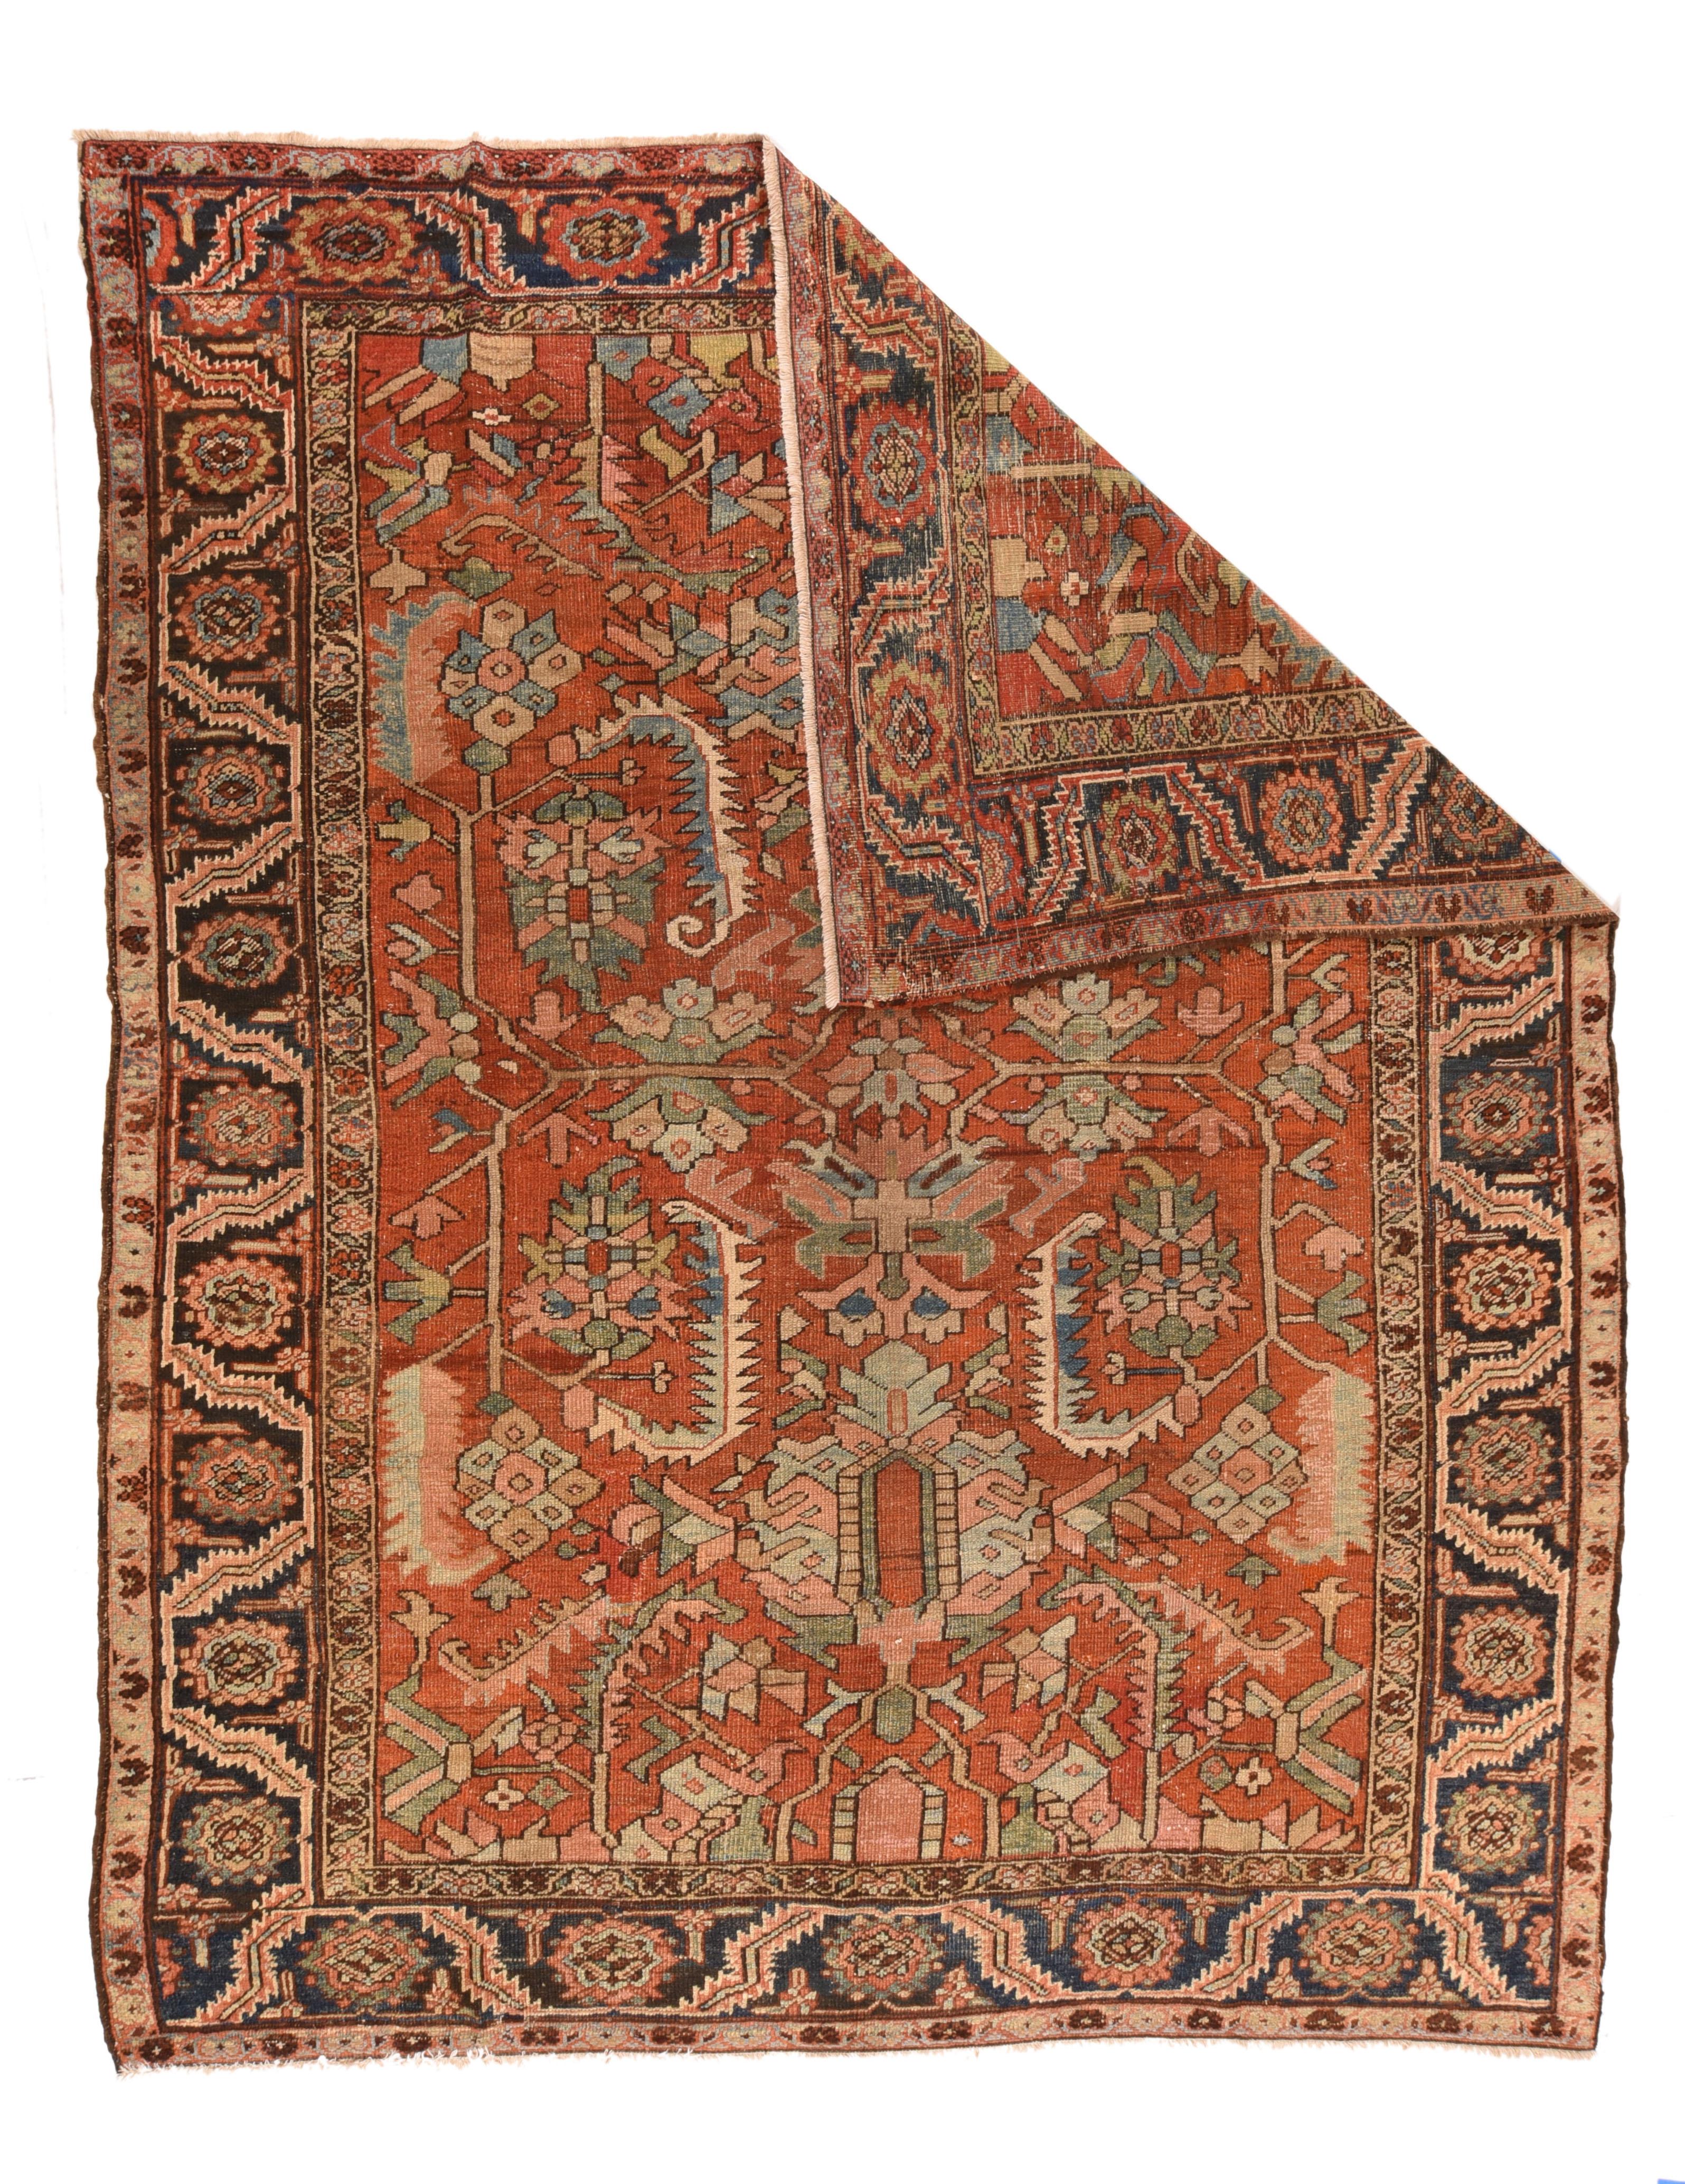 Antique Persian Heriz Area Rug
       